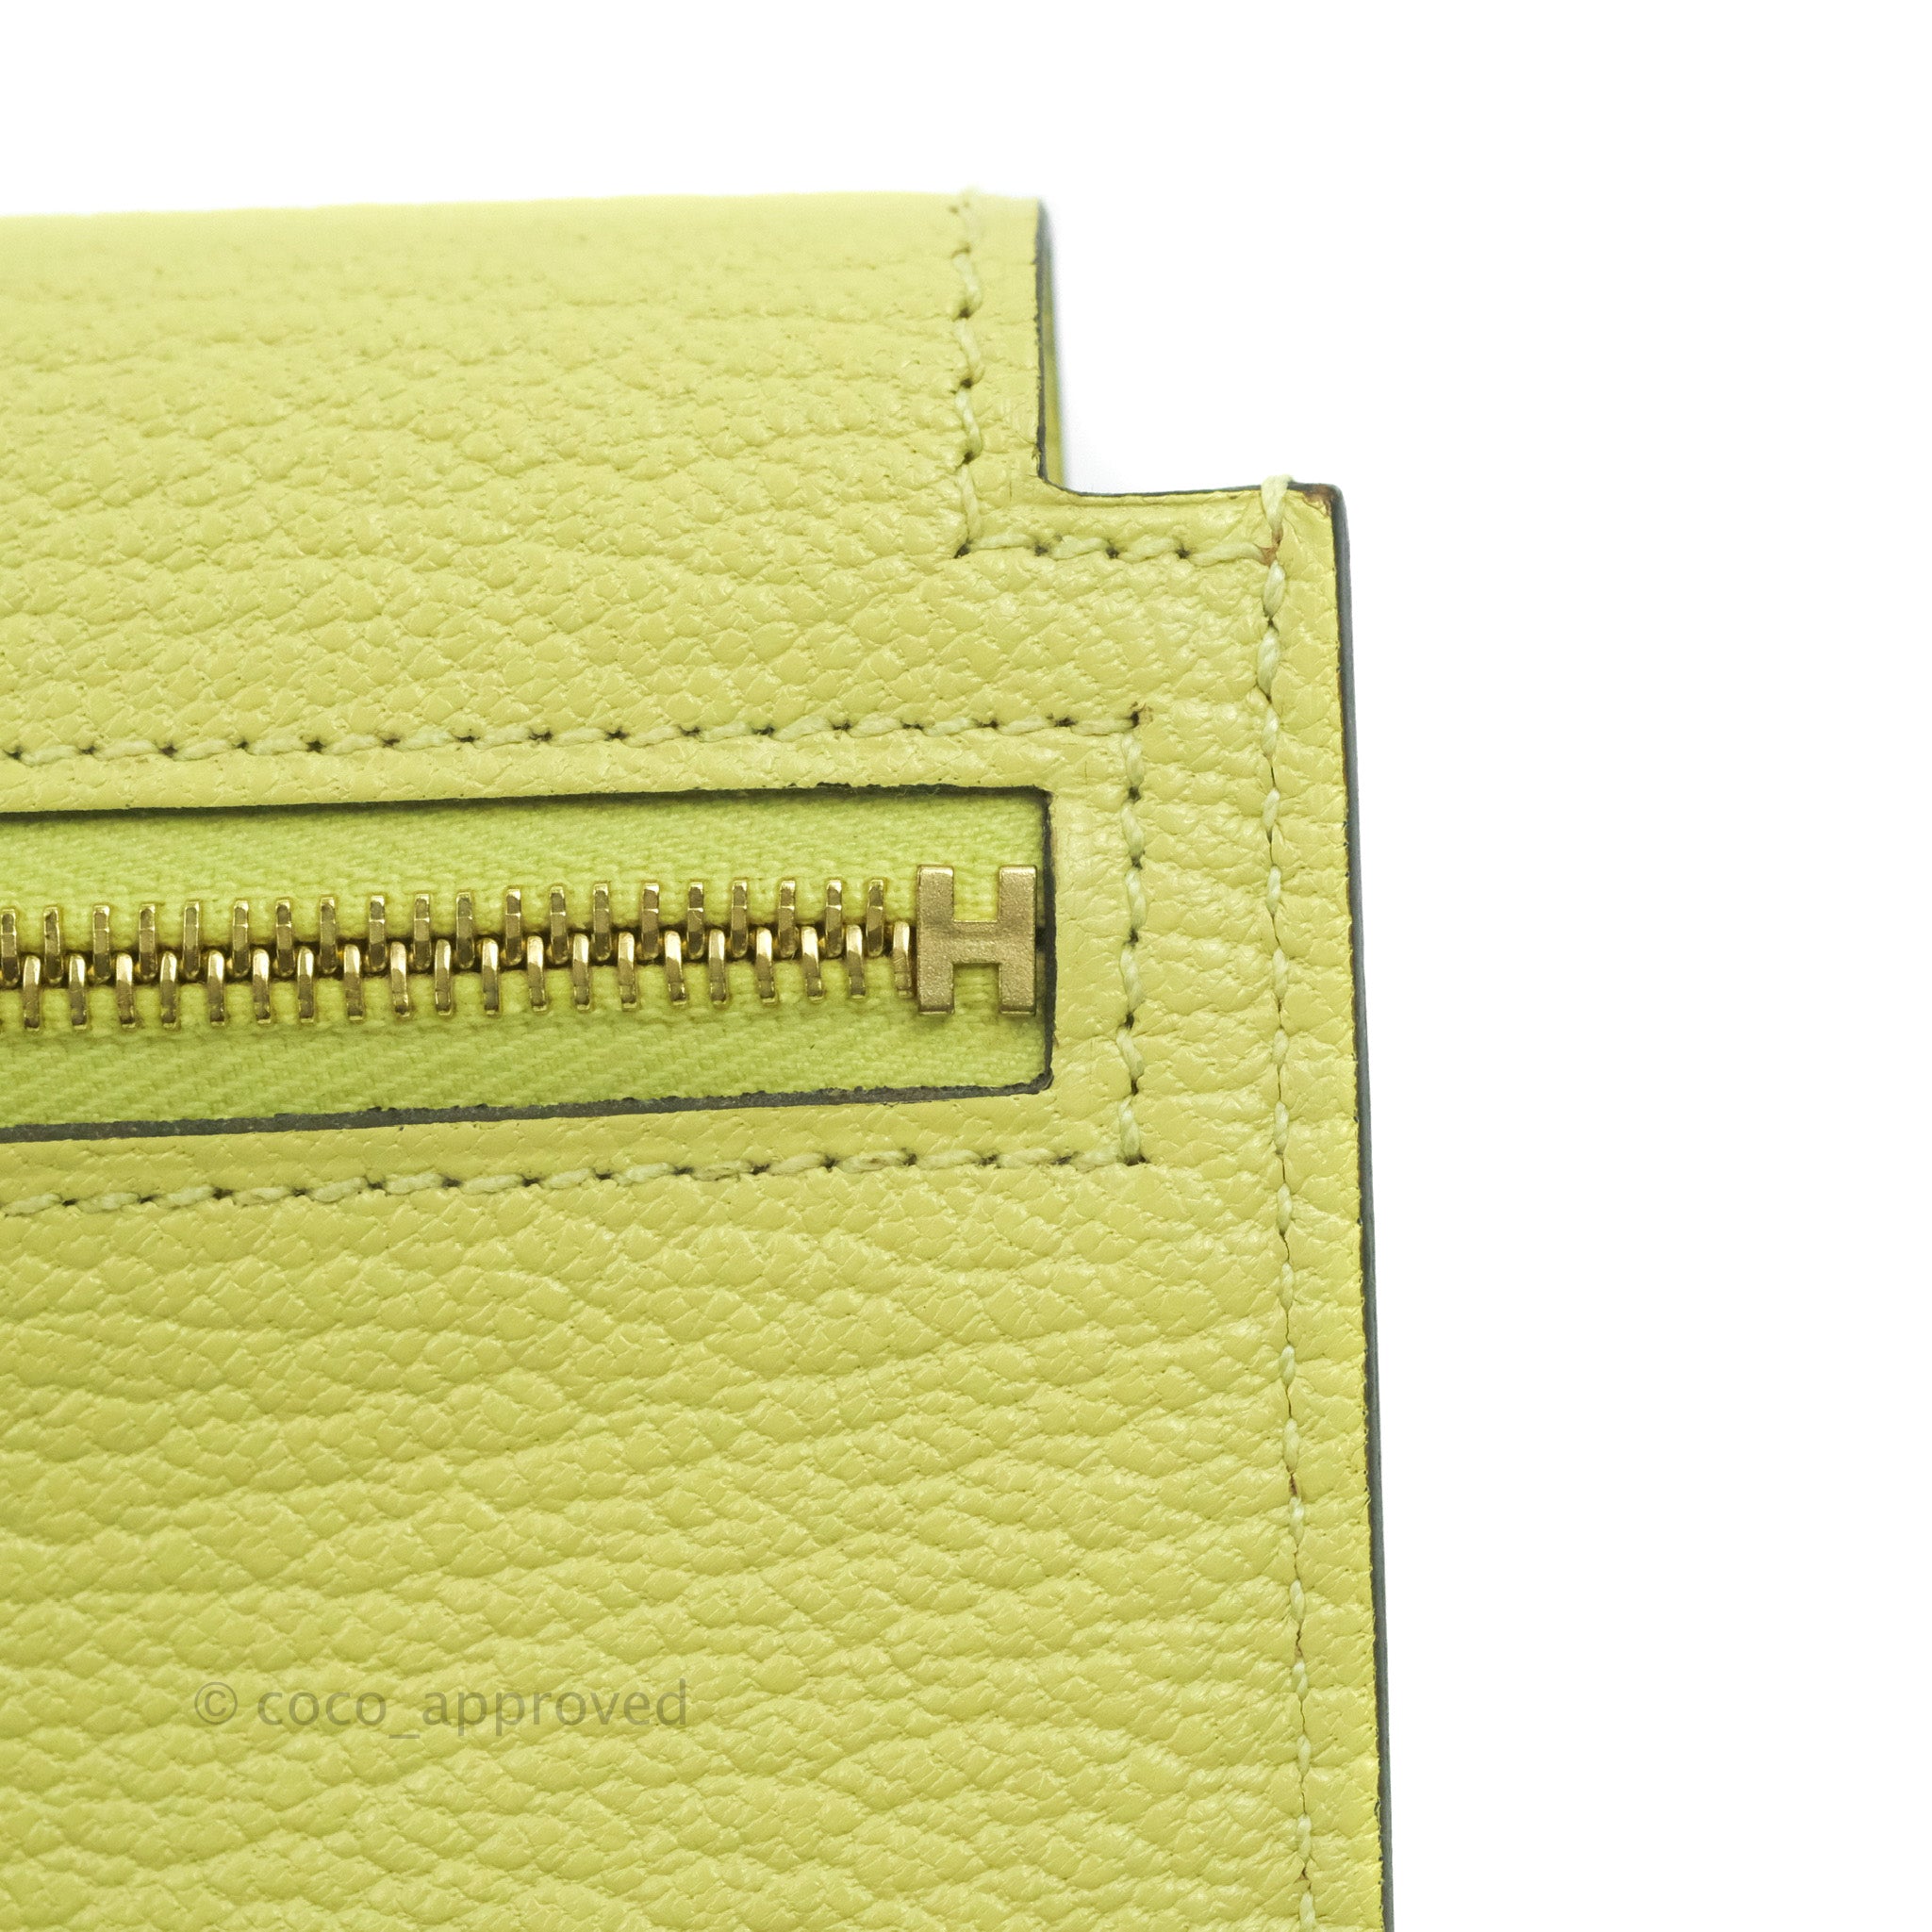 Hermès Kelly Pocket Compact Wallet - BAGAHOLICBOY